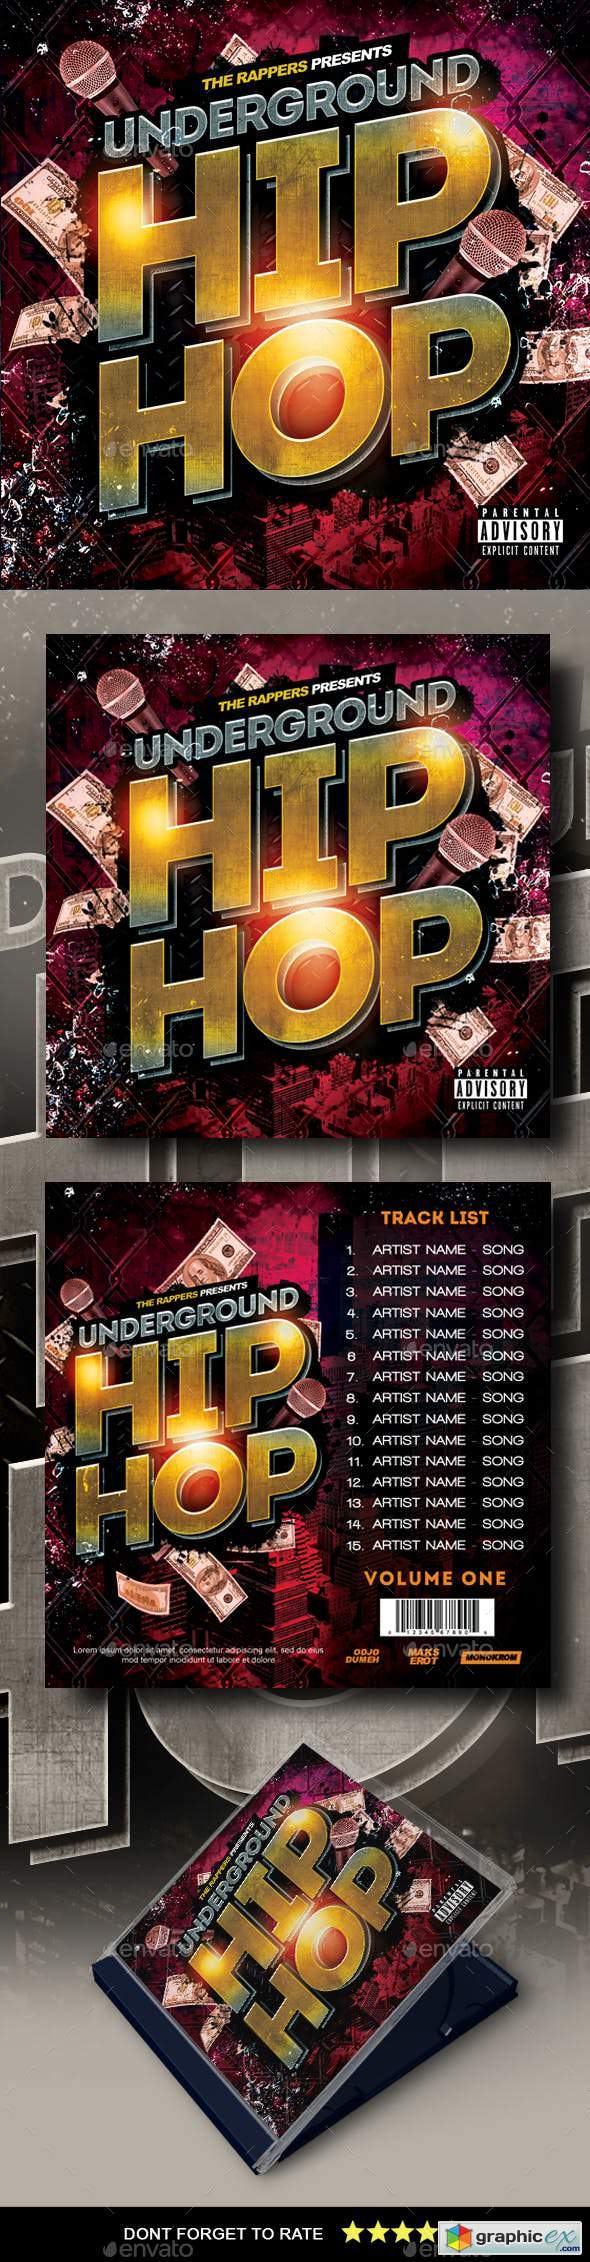 Hip Hop Mixtape Cover